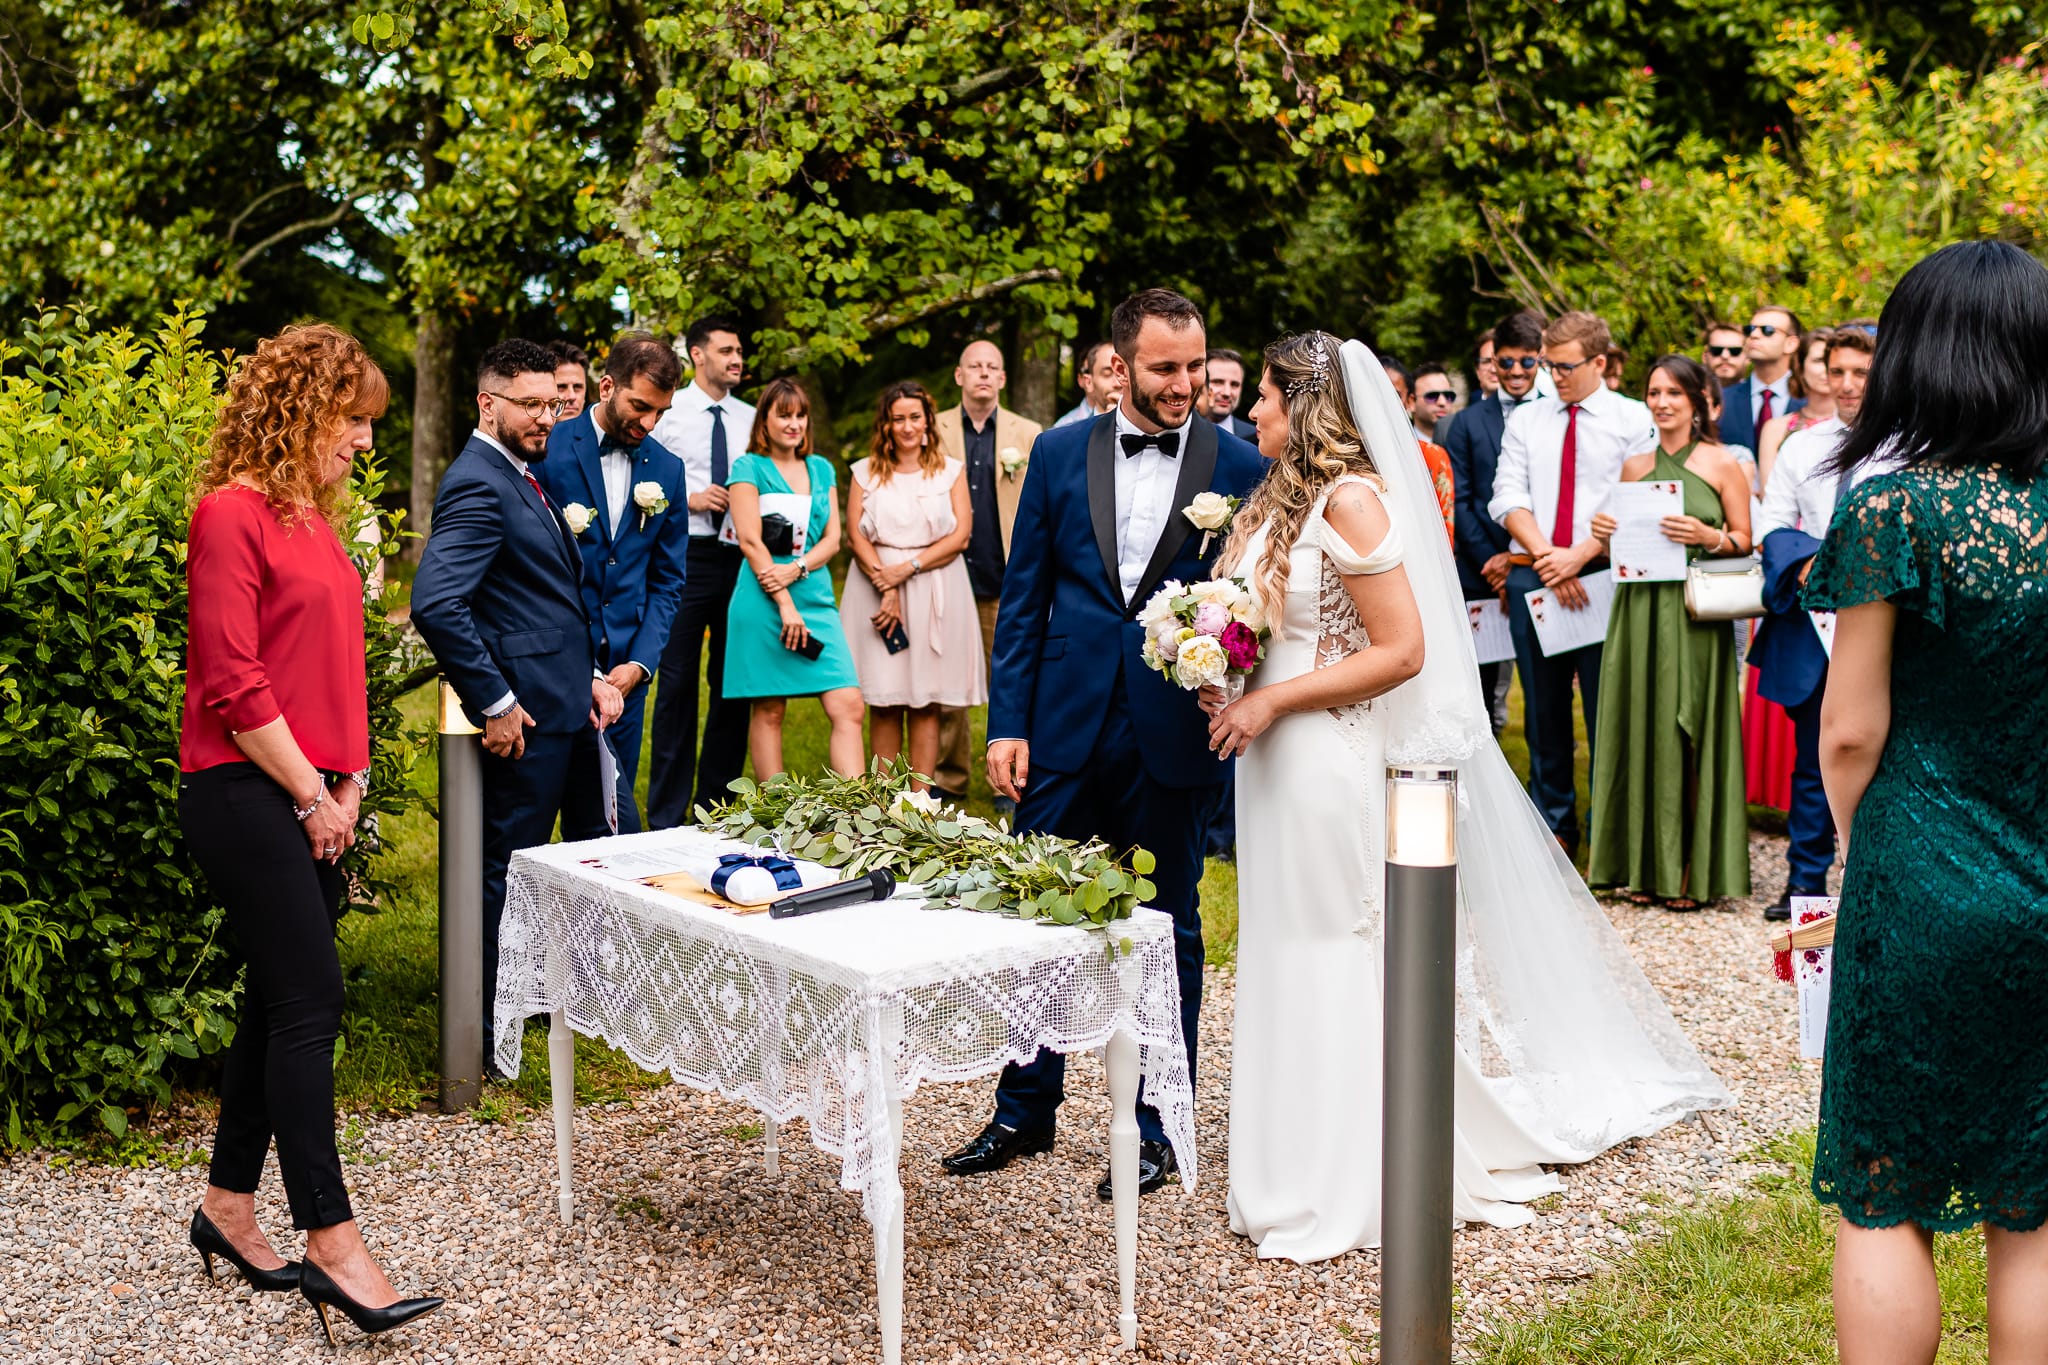 Mariana Nicholas Matrimonio da Sogno a Castelvecchio Sagrado Gorizia cerimonia all'aperto civile sposi